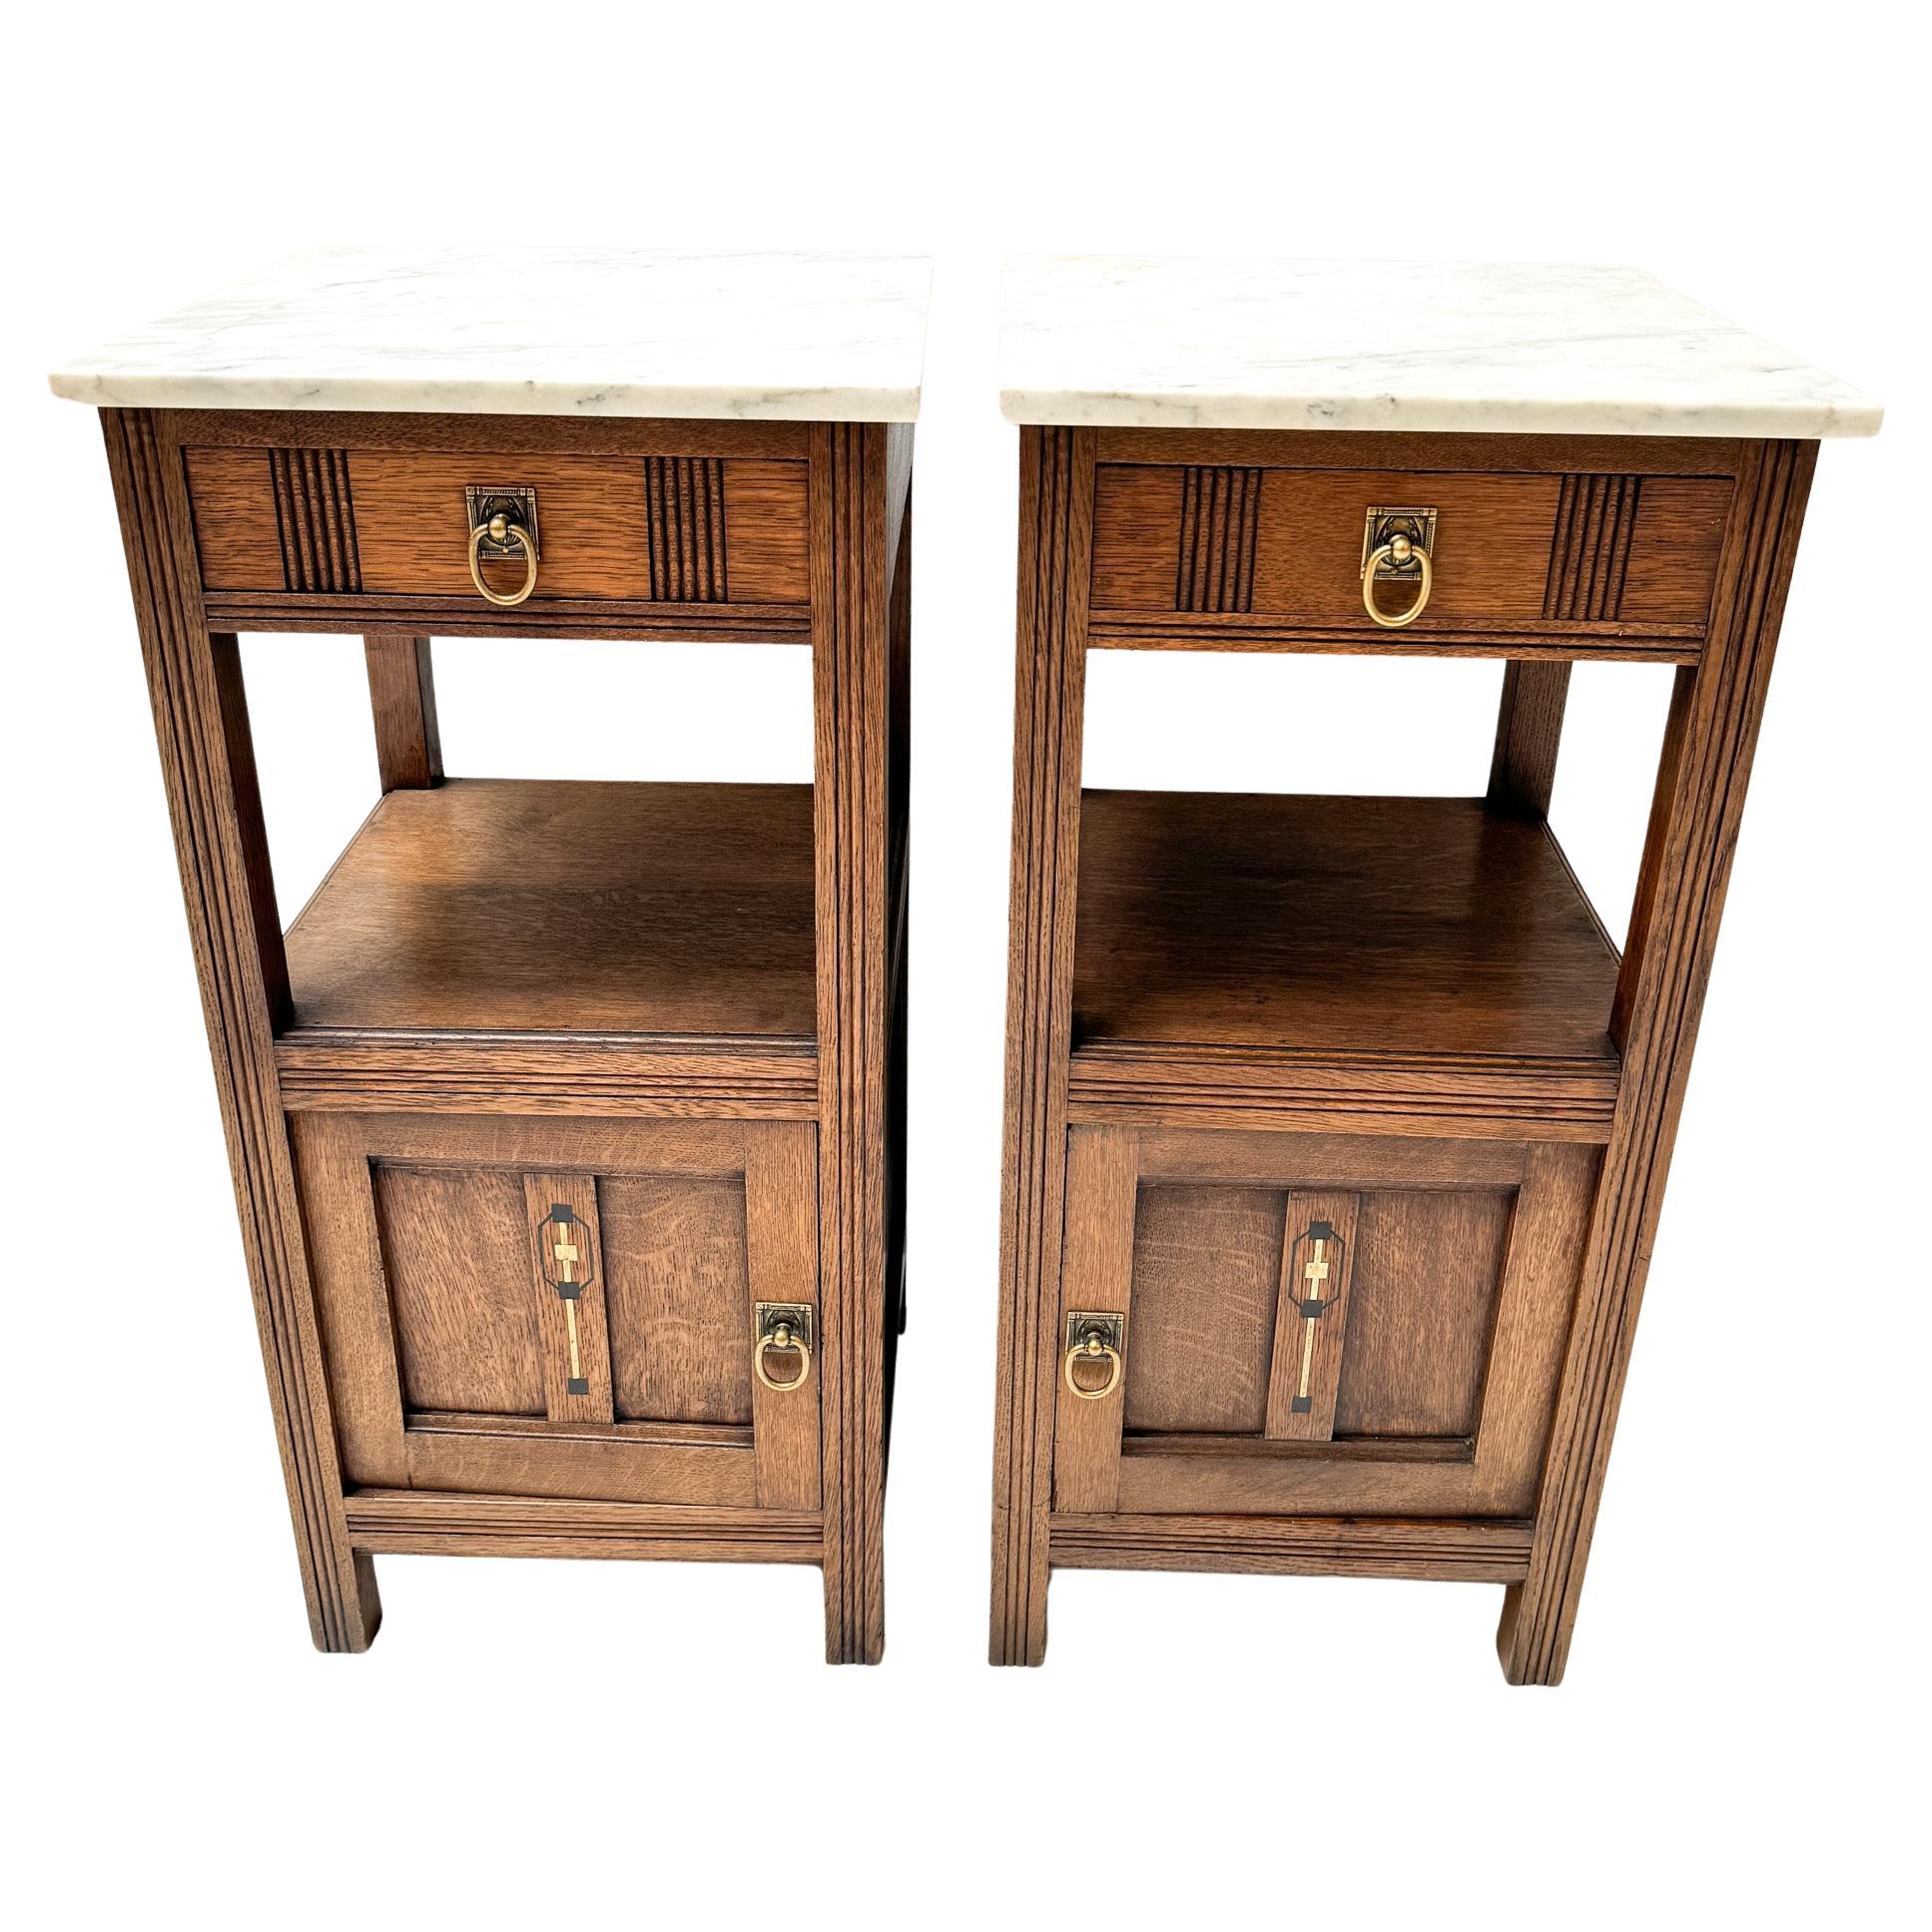 Two Oak Art Nouveau Nightstands or Bedside Tables, 1900s For Sale